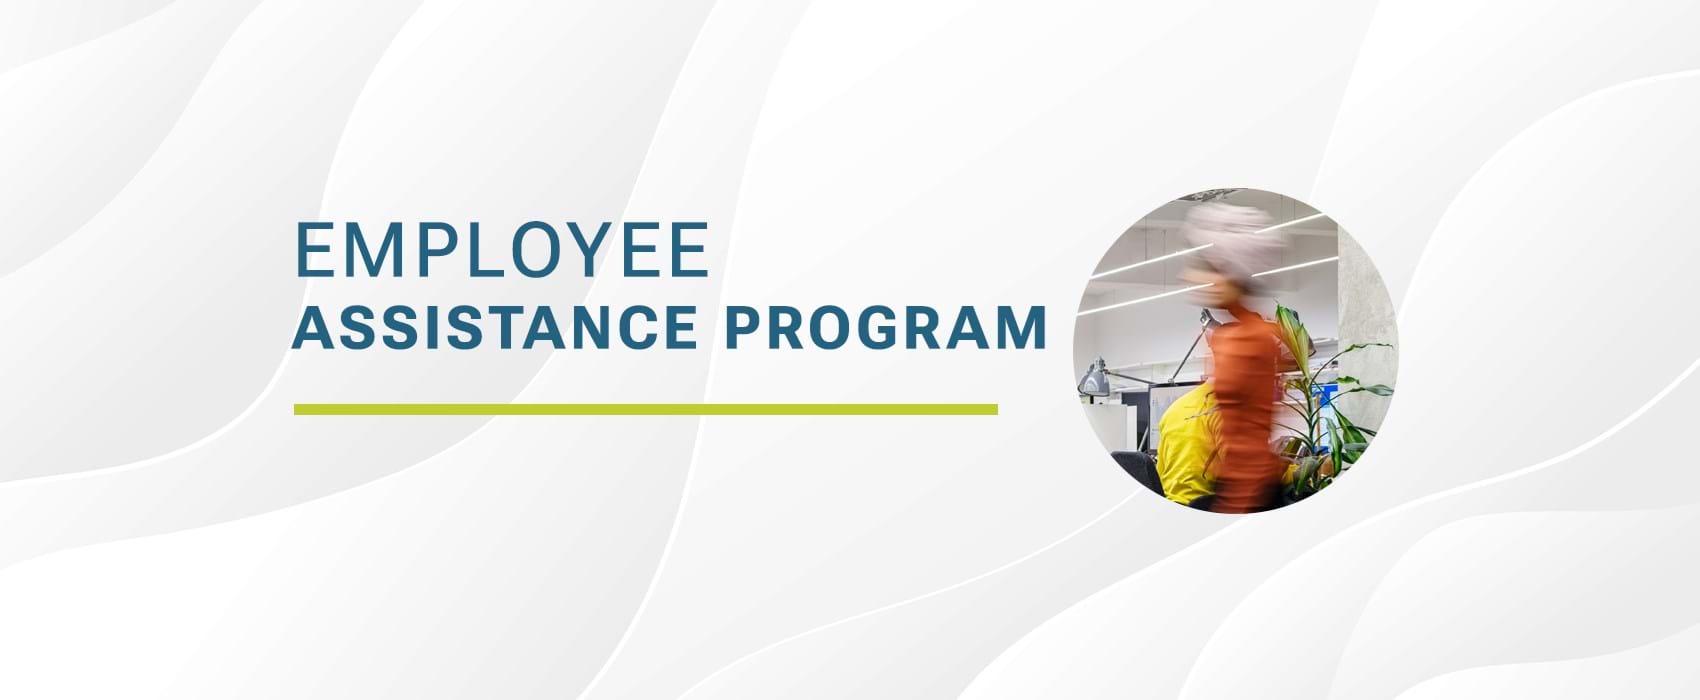 Employee Assistance Program (EAP) Banner Image